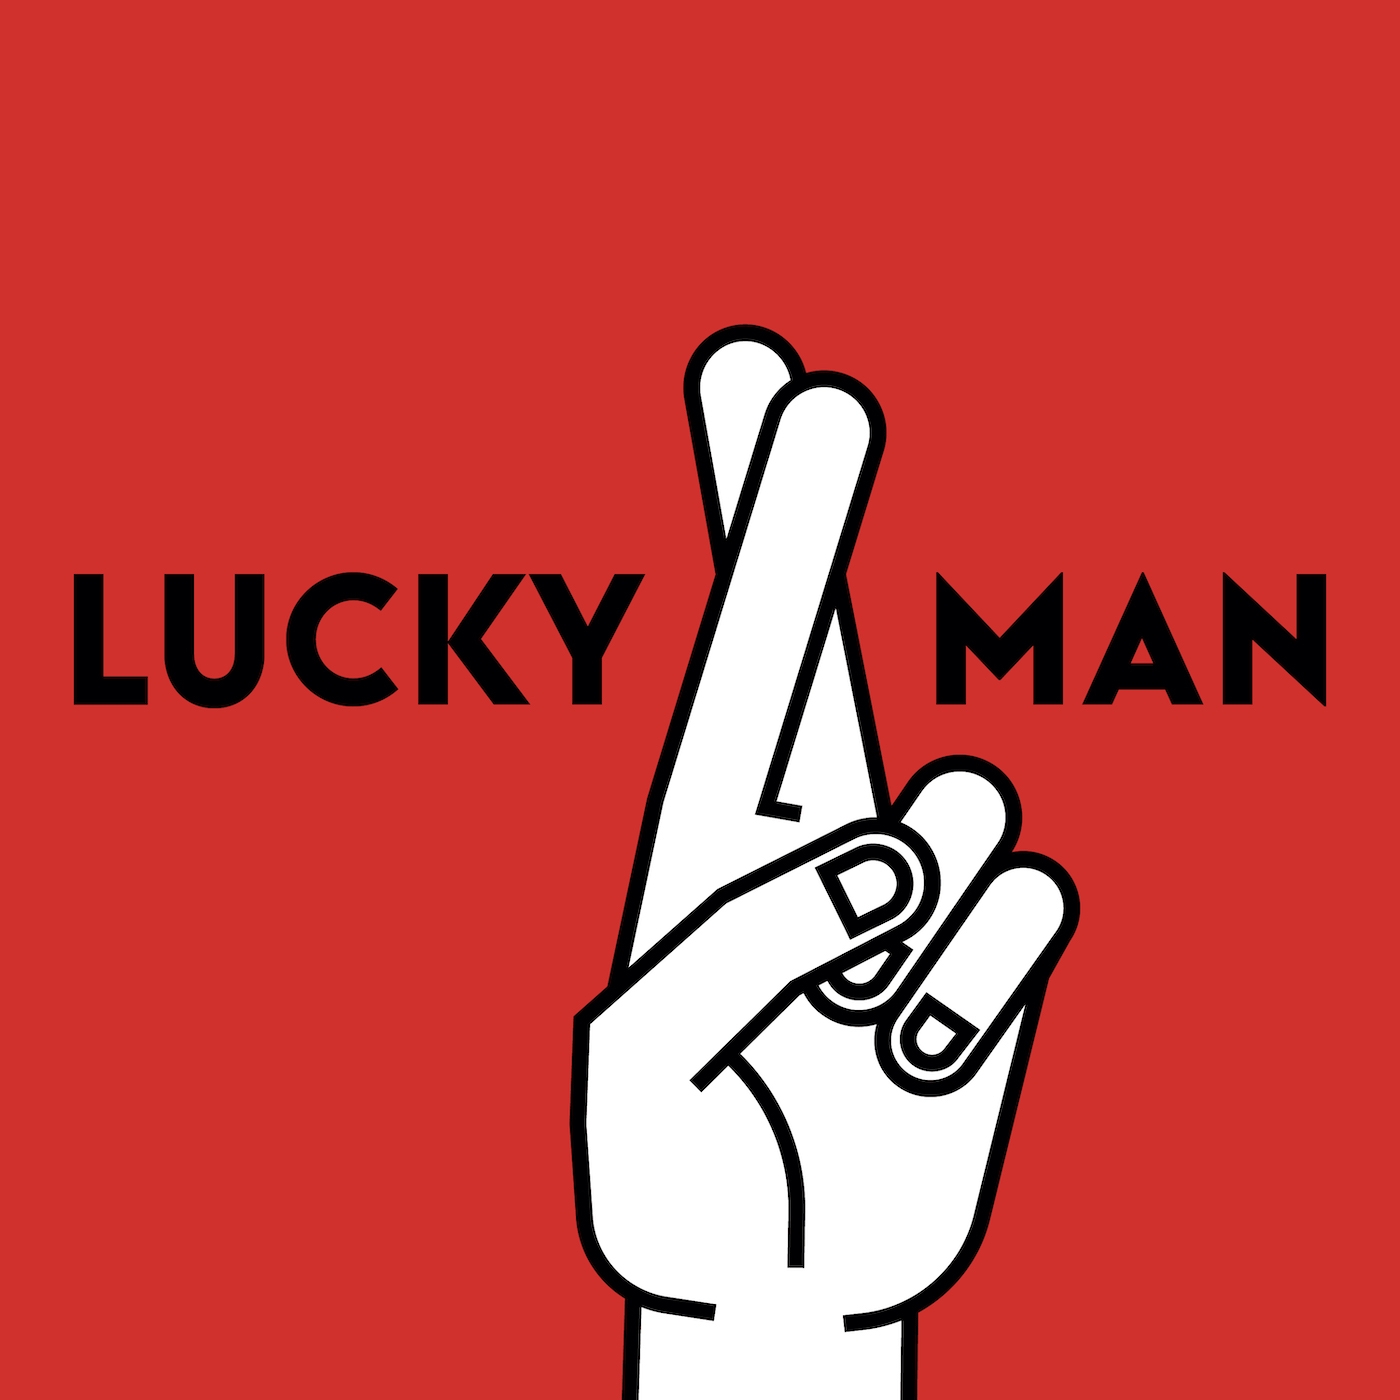 https://www.elicitmagazine.com/wp-content/uploads/2020/05/Lucky-Man-ep-single-14001400.jpg